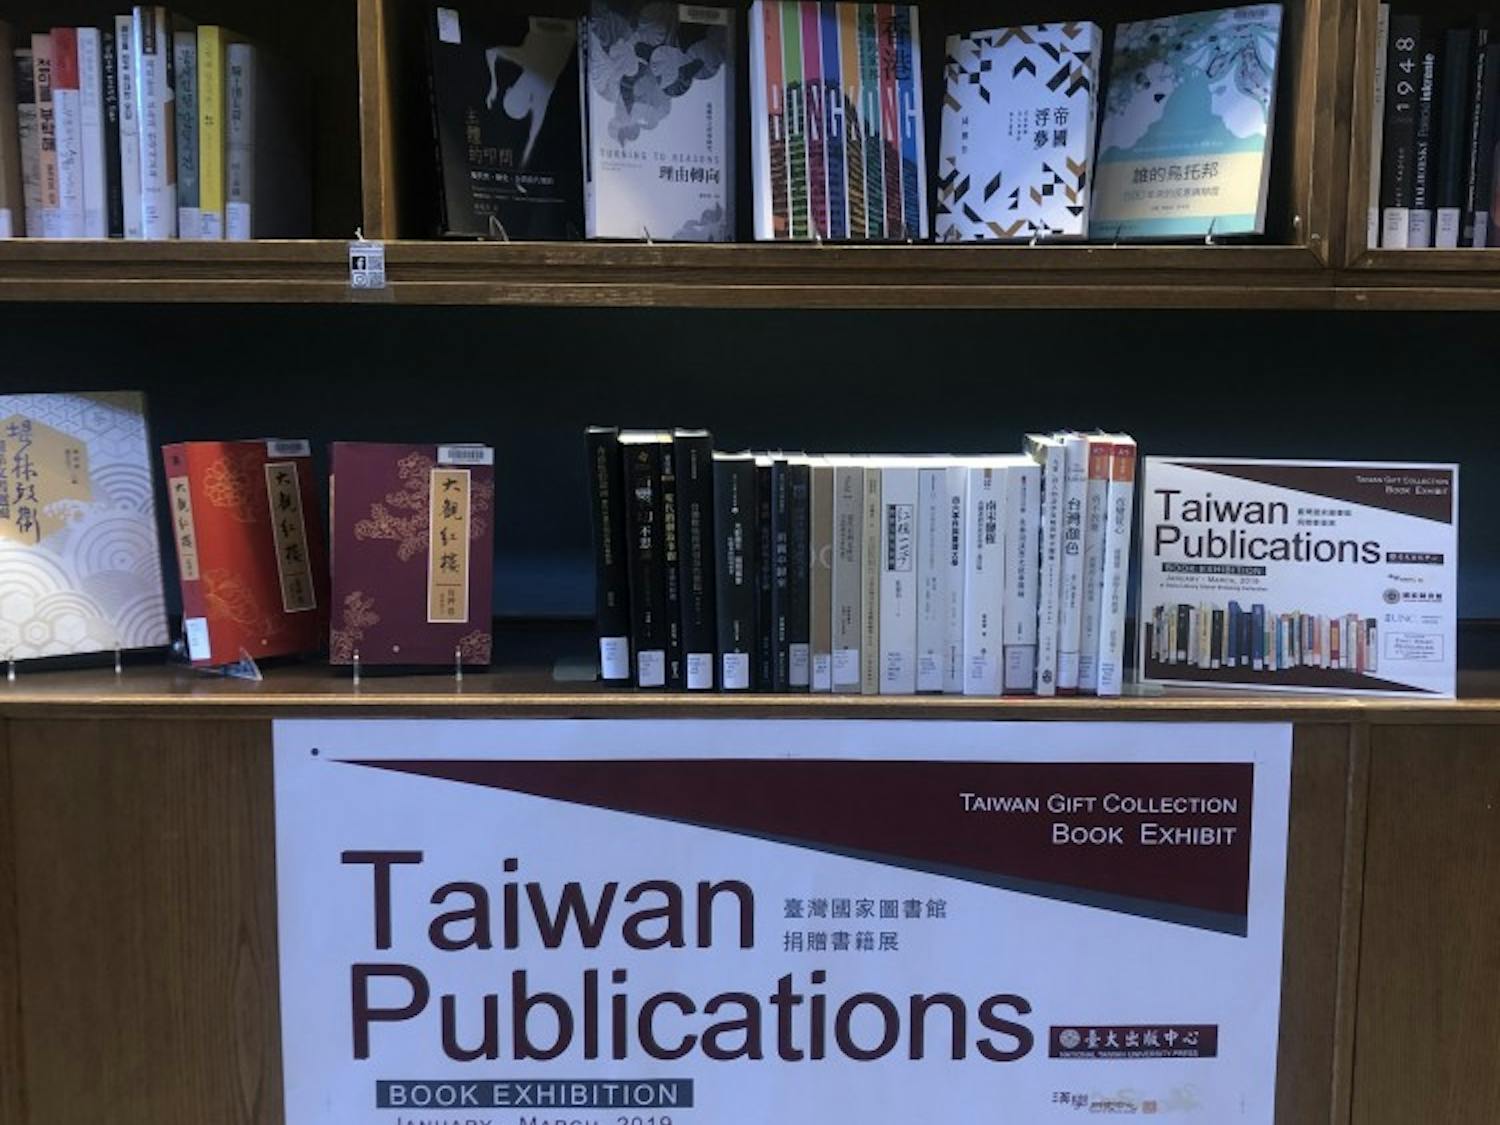 Taiwan Publications